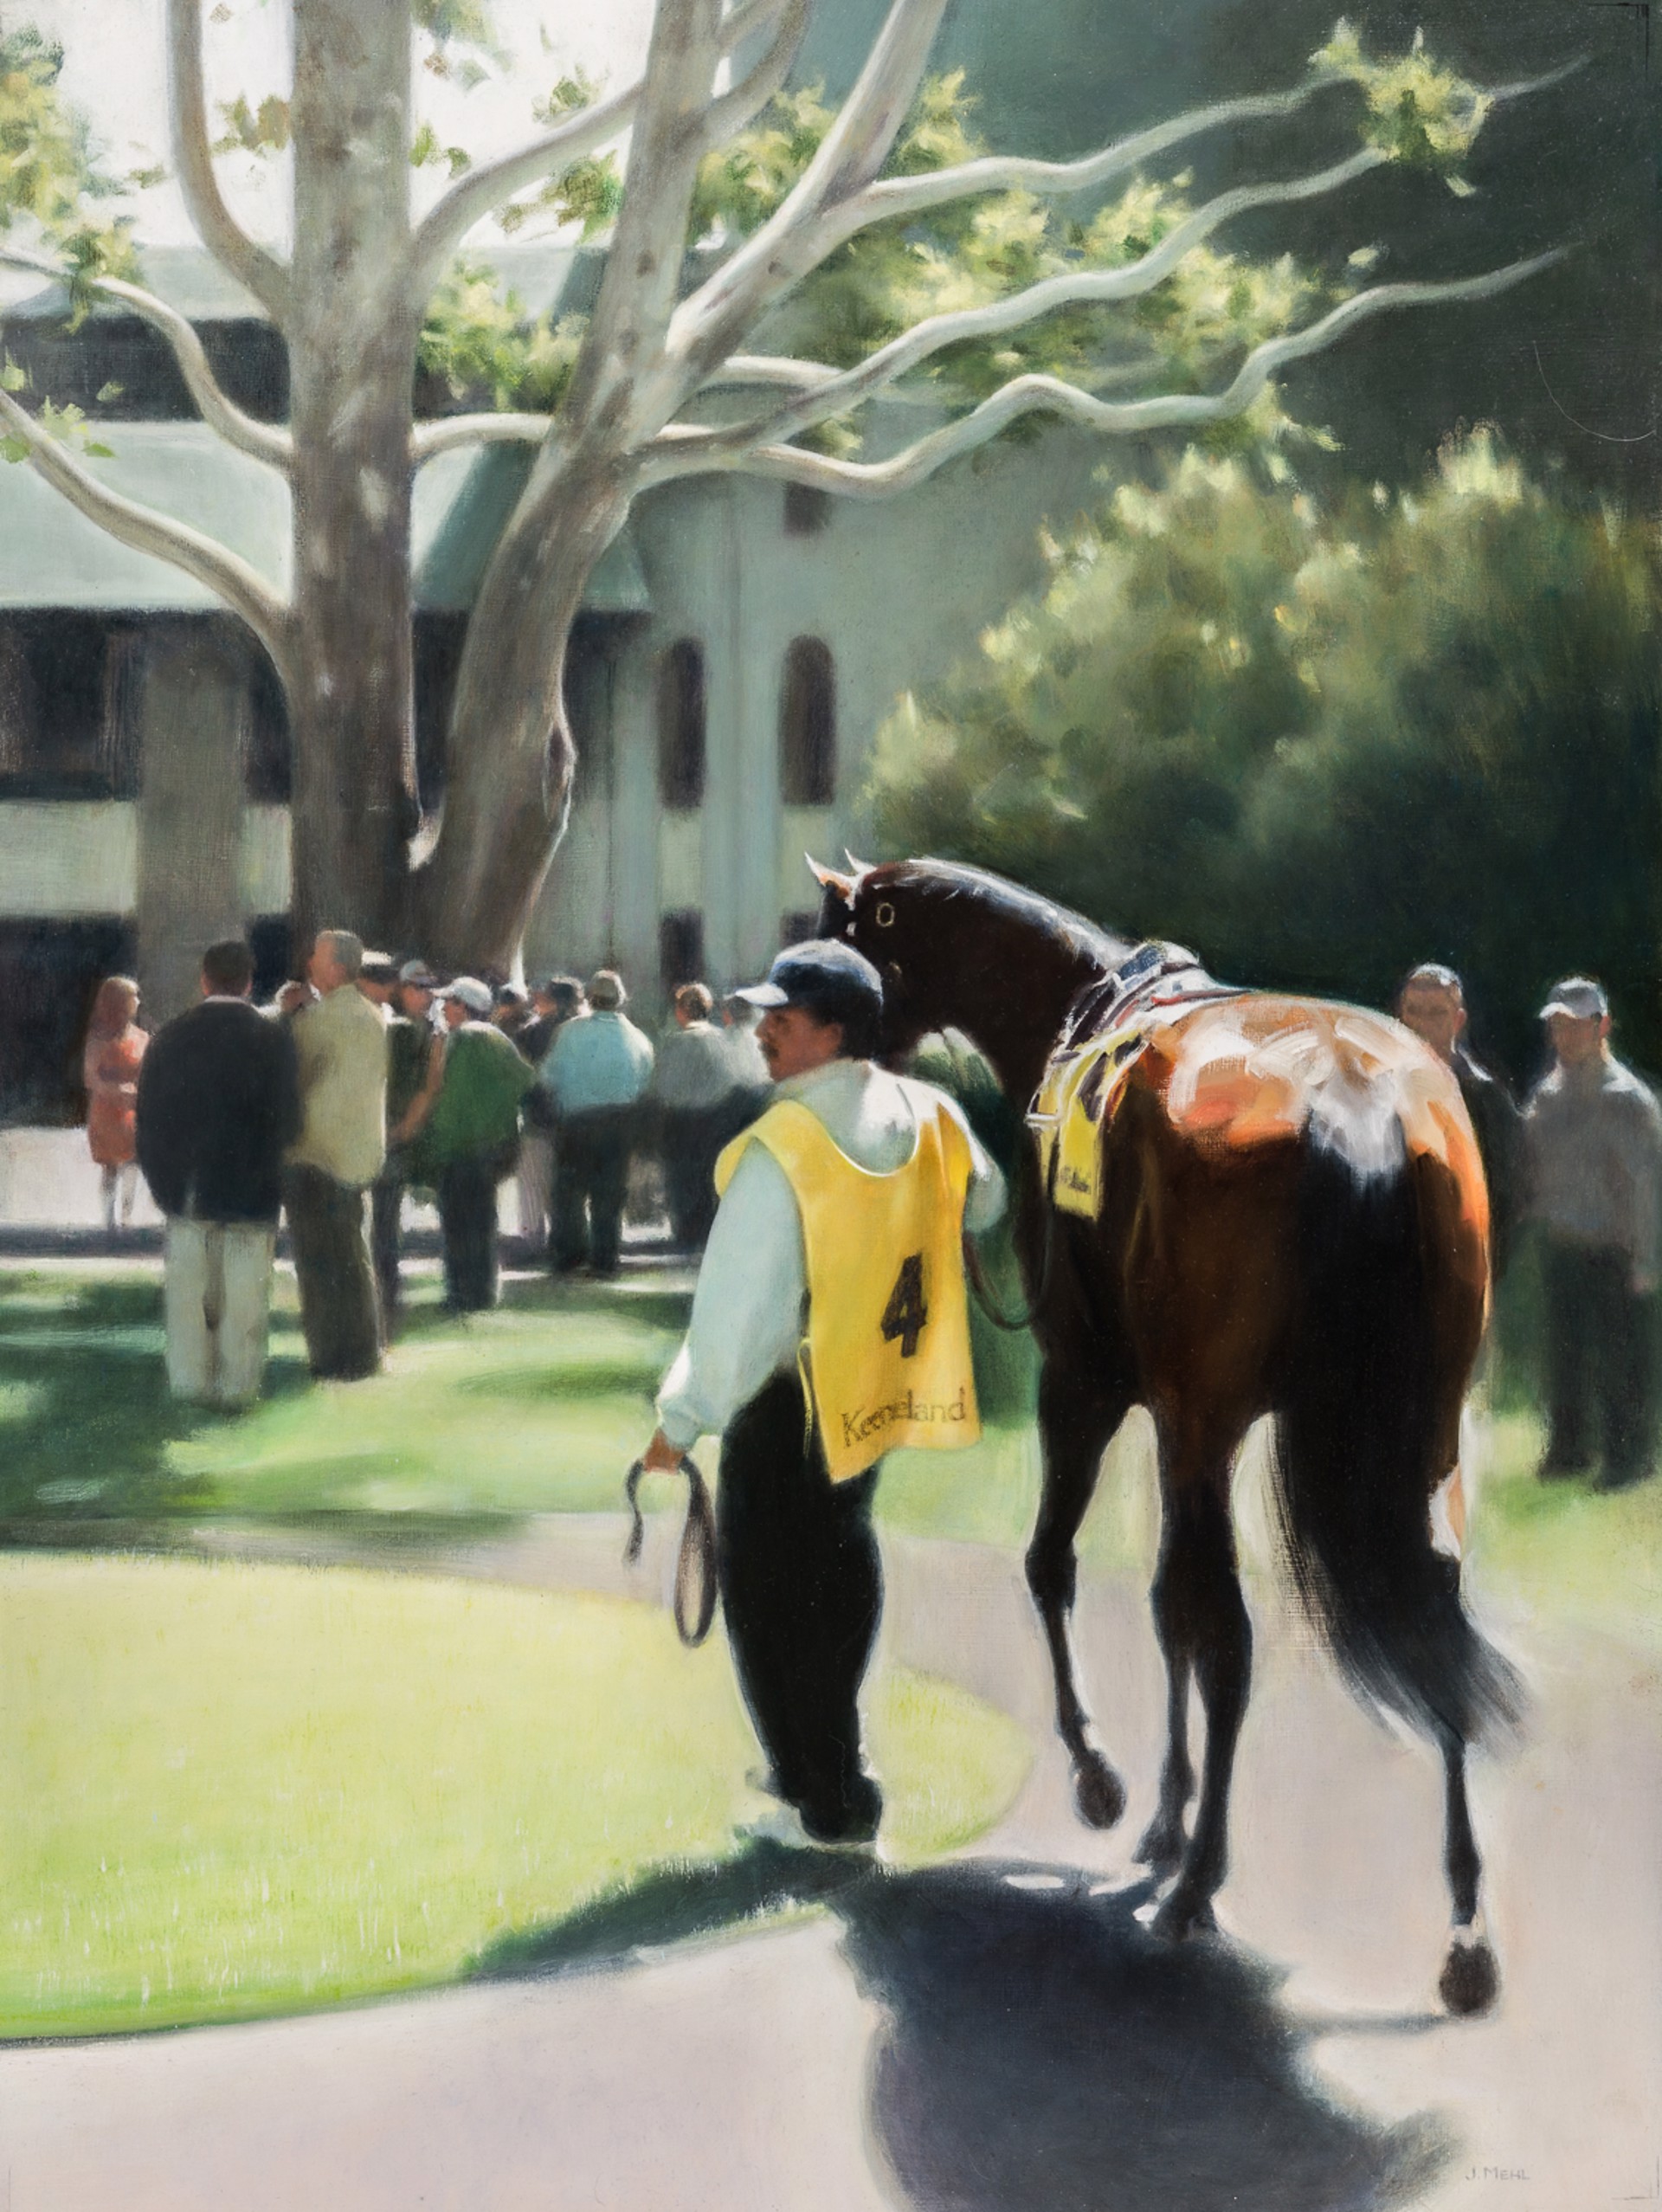 #4 HORSE IN THE PADDOCK by Joanne Mehl